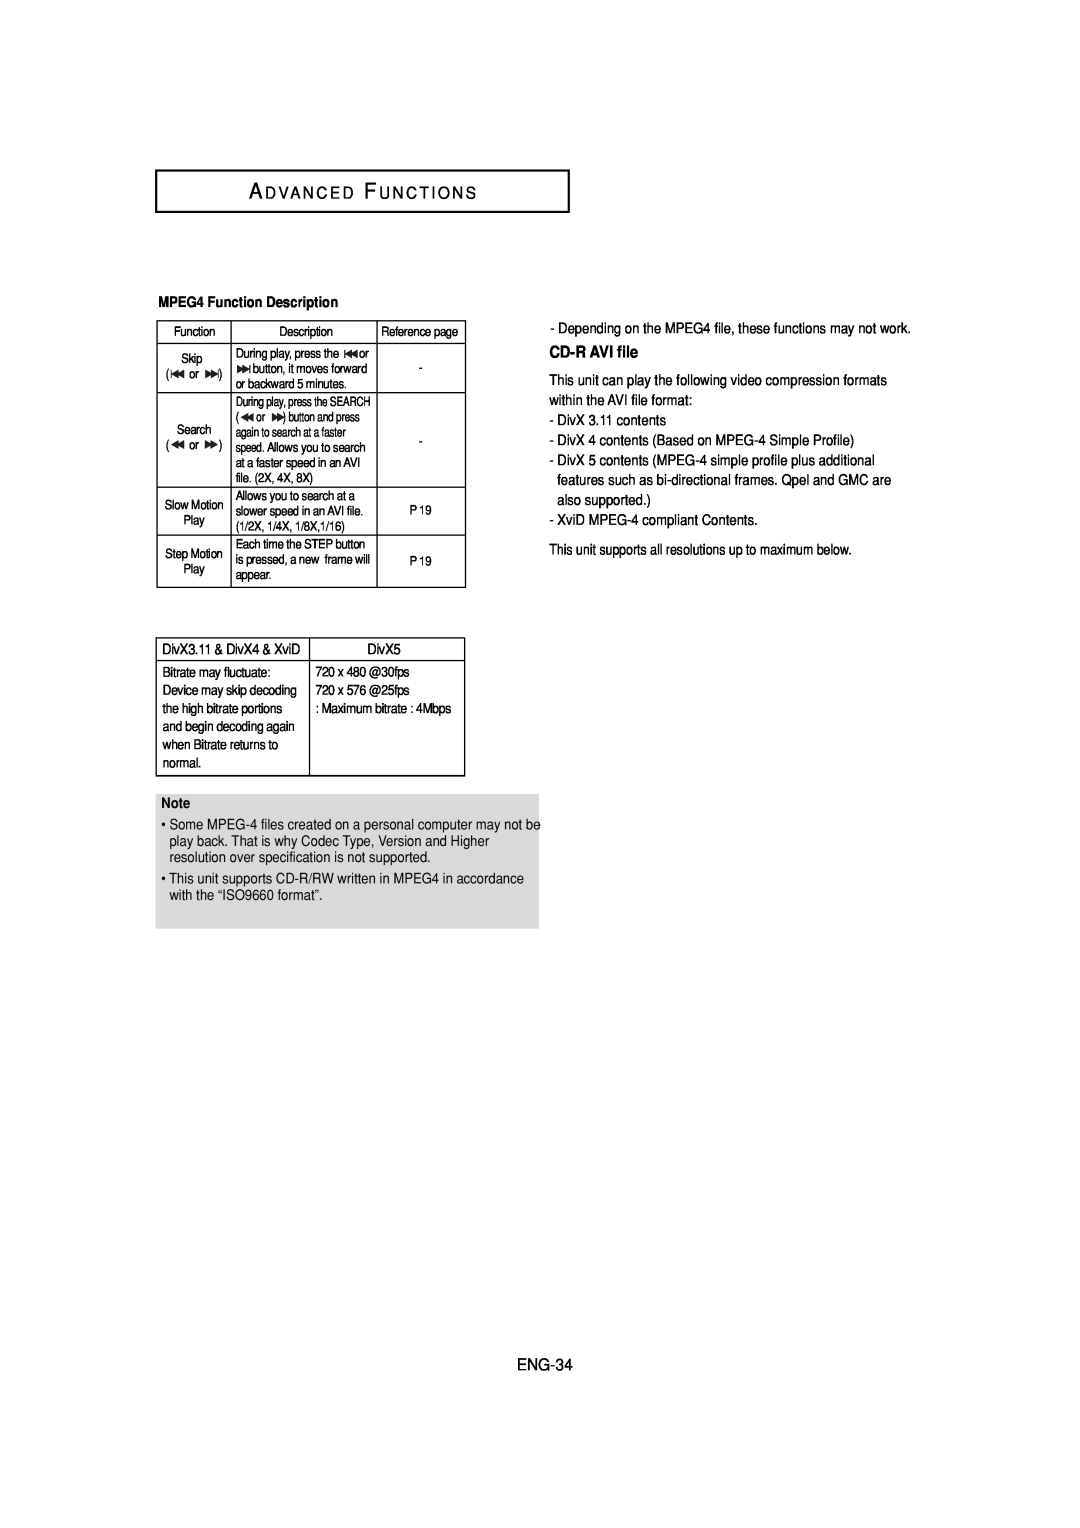 Samsung DVD-P181 manual A D Va N C E D F U N C T I O N S, CD-R AVI file, ENG-34, MPEG4 Function Description 